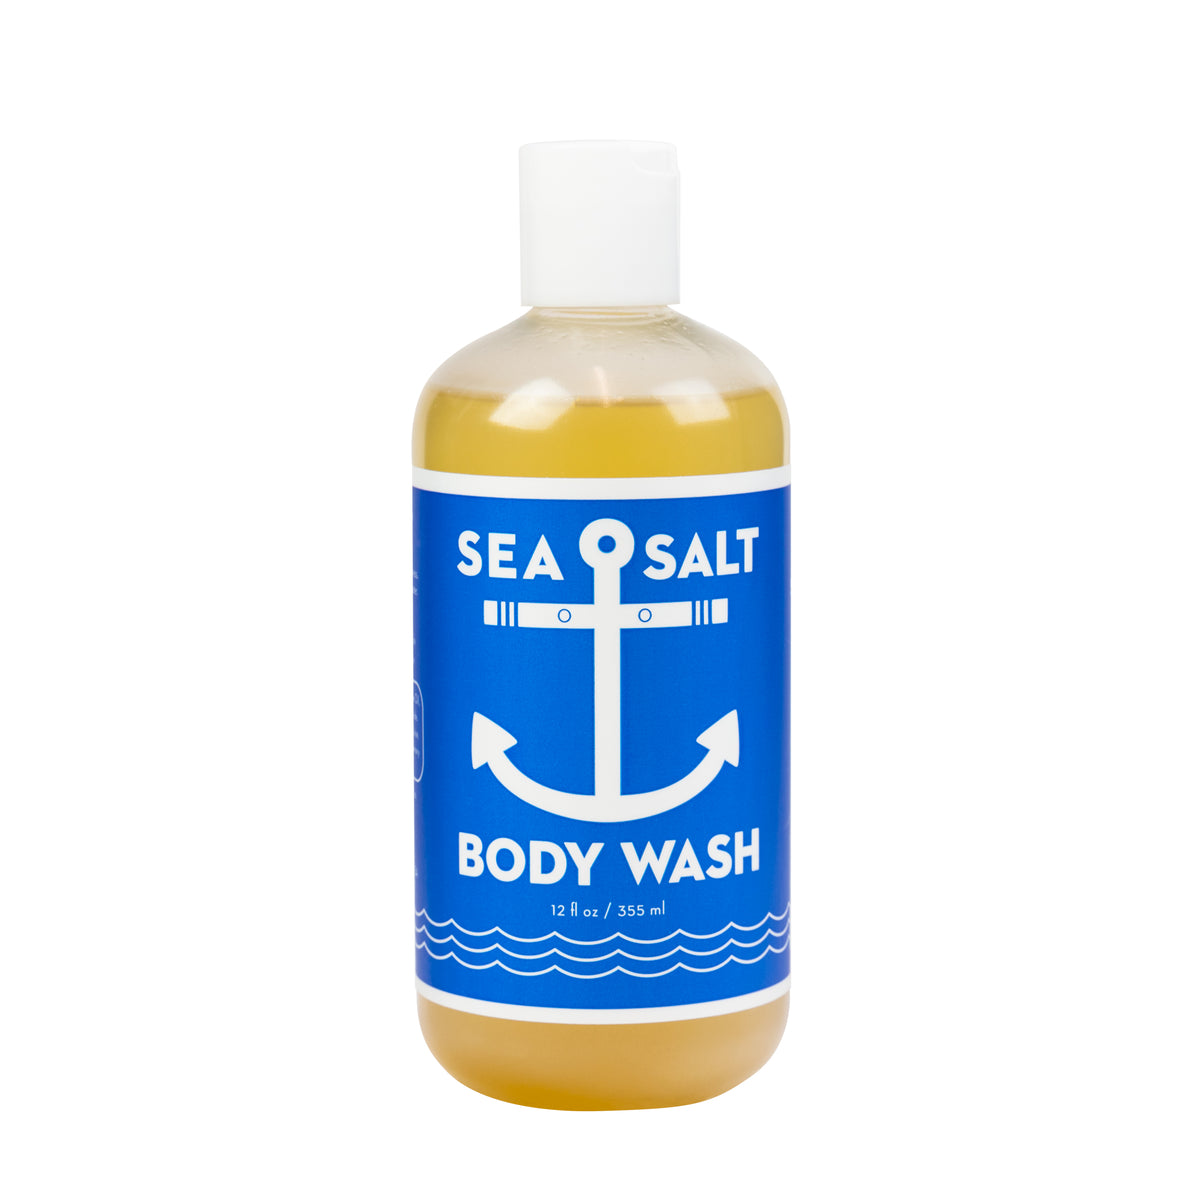 Primary image of Sea Salt Body Wash